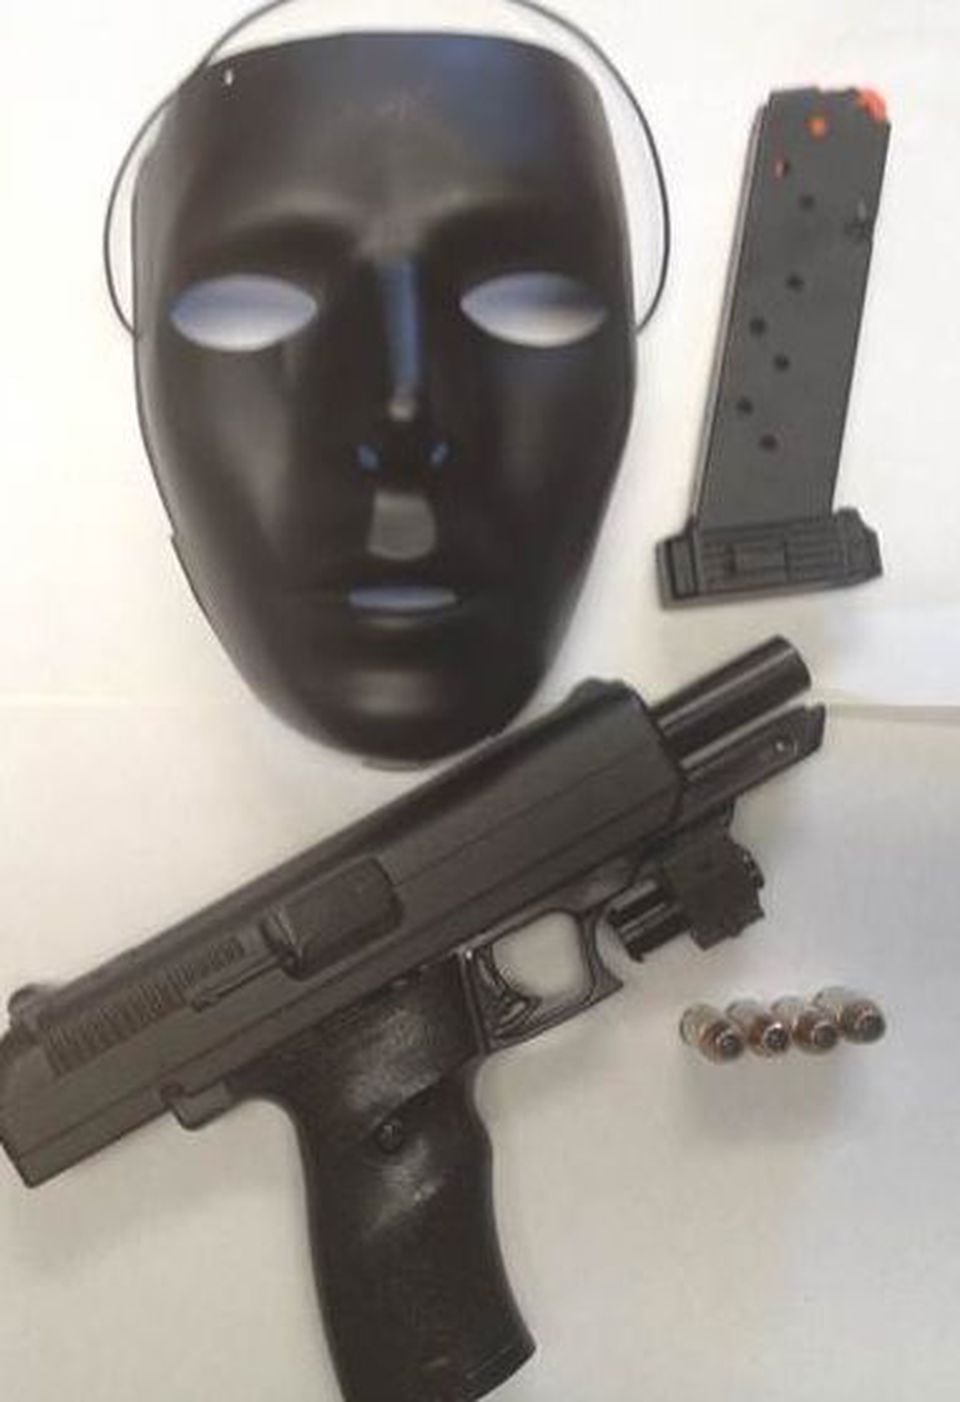 Gun, mask seized after routine traffic stop in Burlington - The Boston Globe